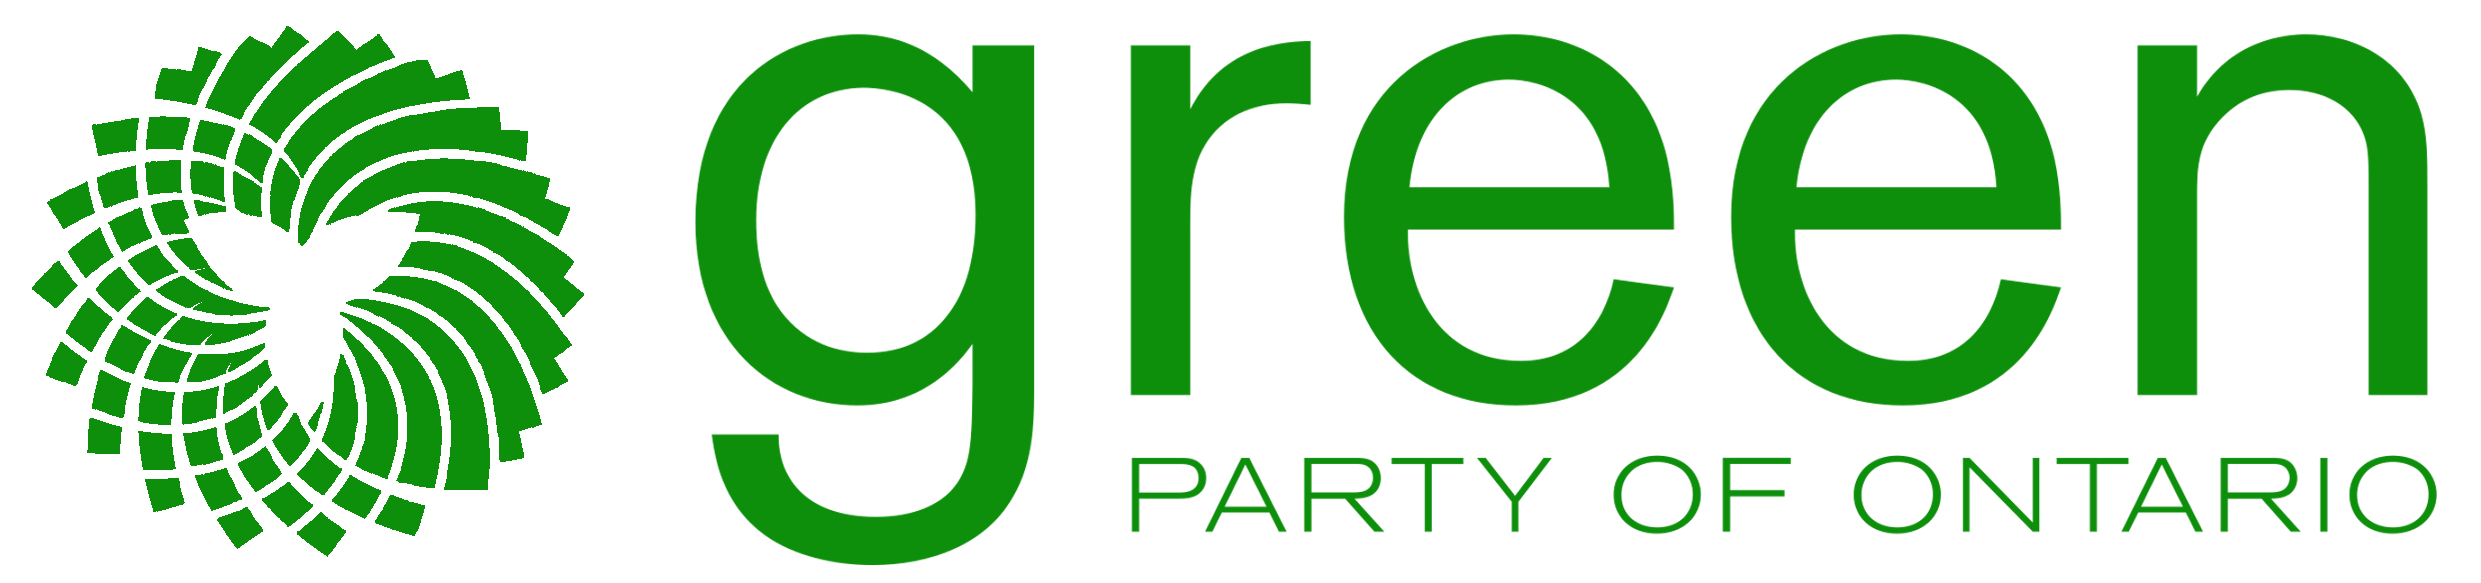 GPO green logo